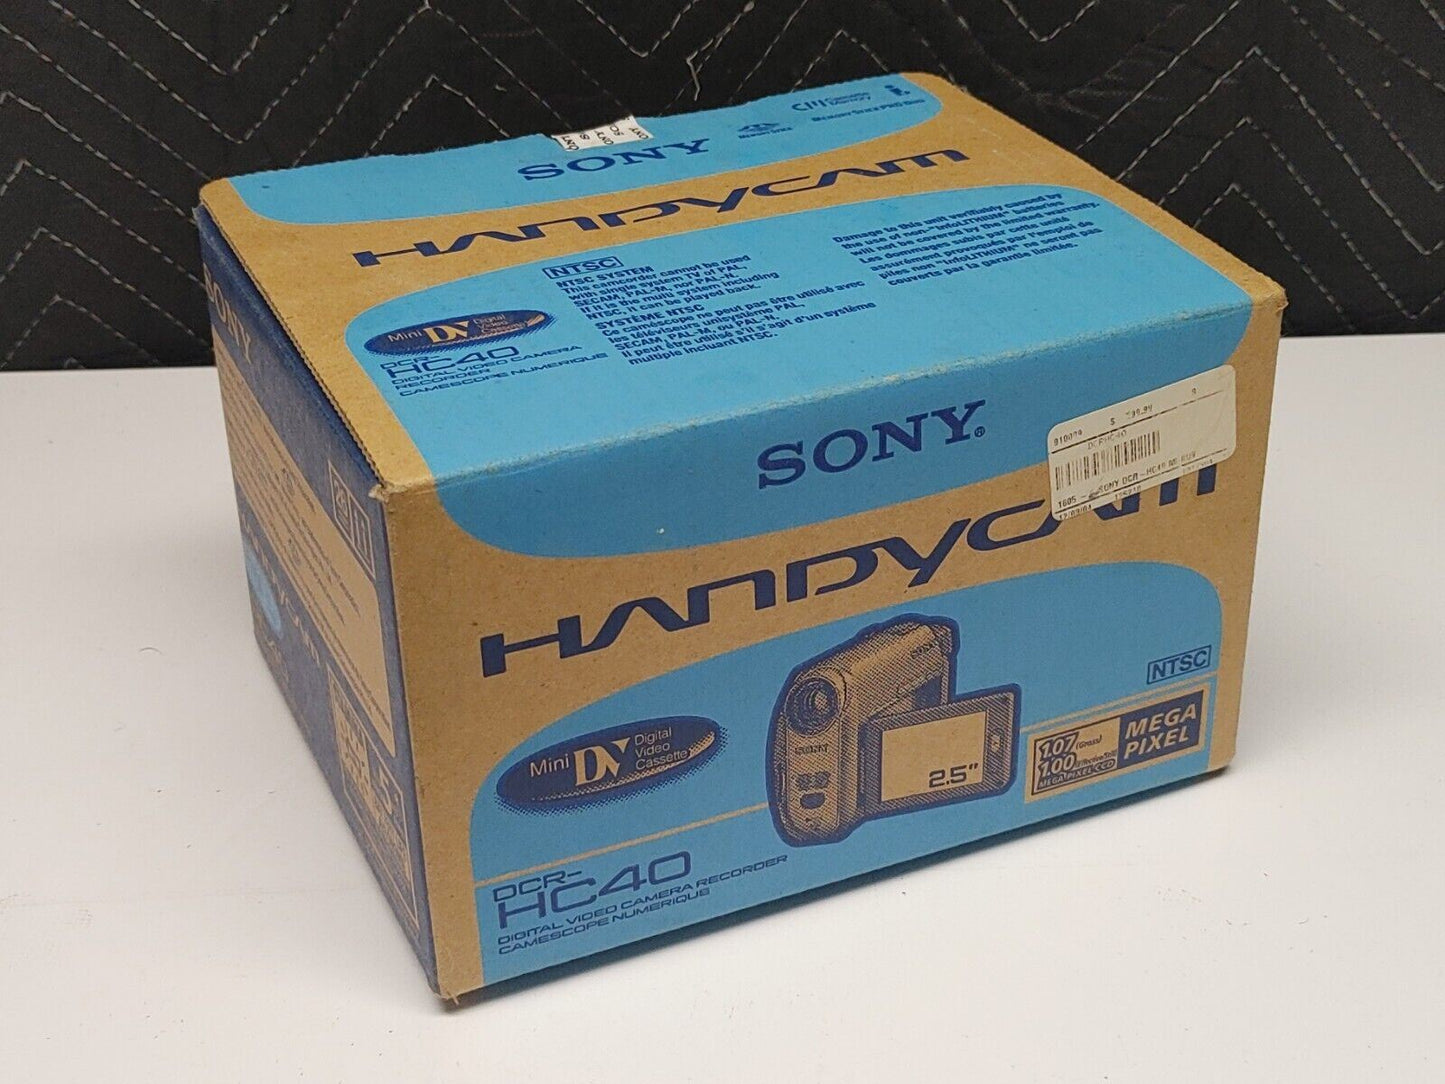 Sony DCR-HC40 Mini DV Handycam Camcorder